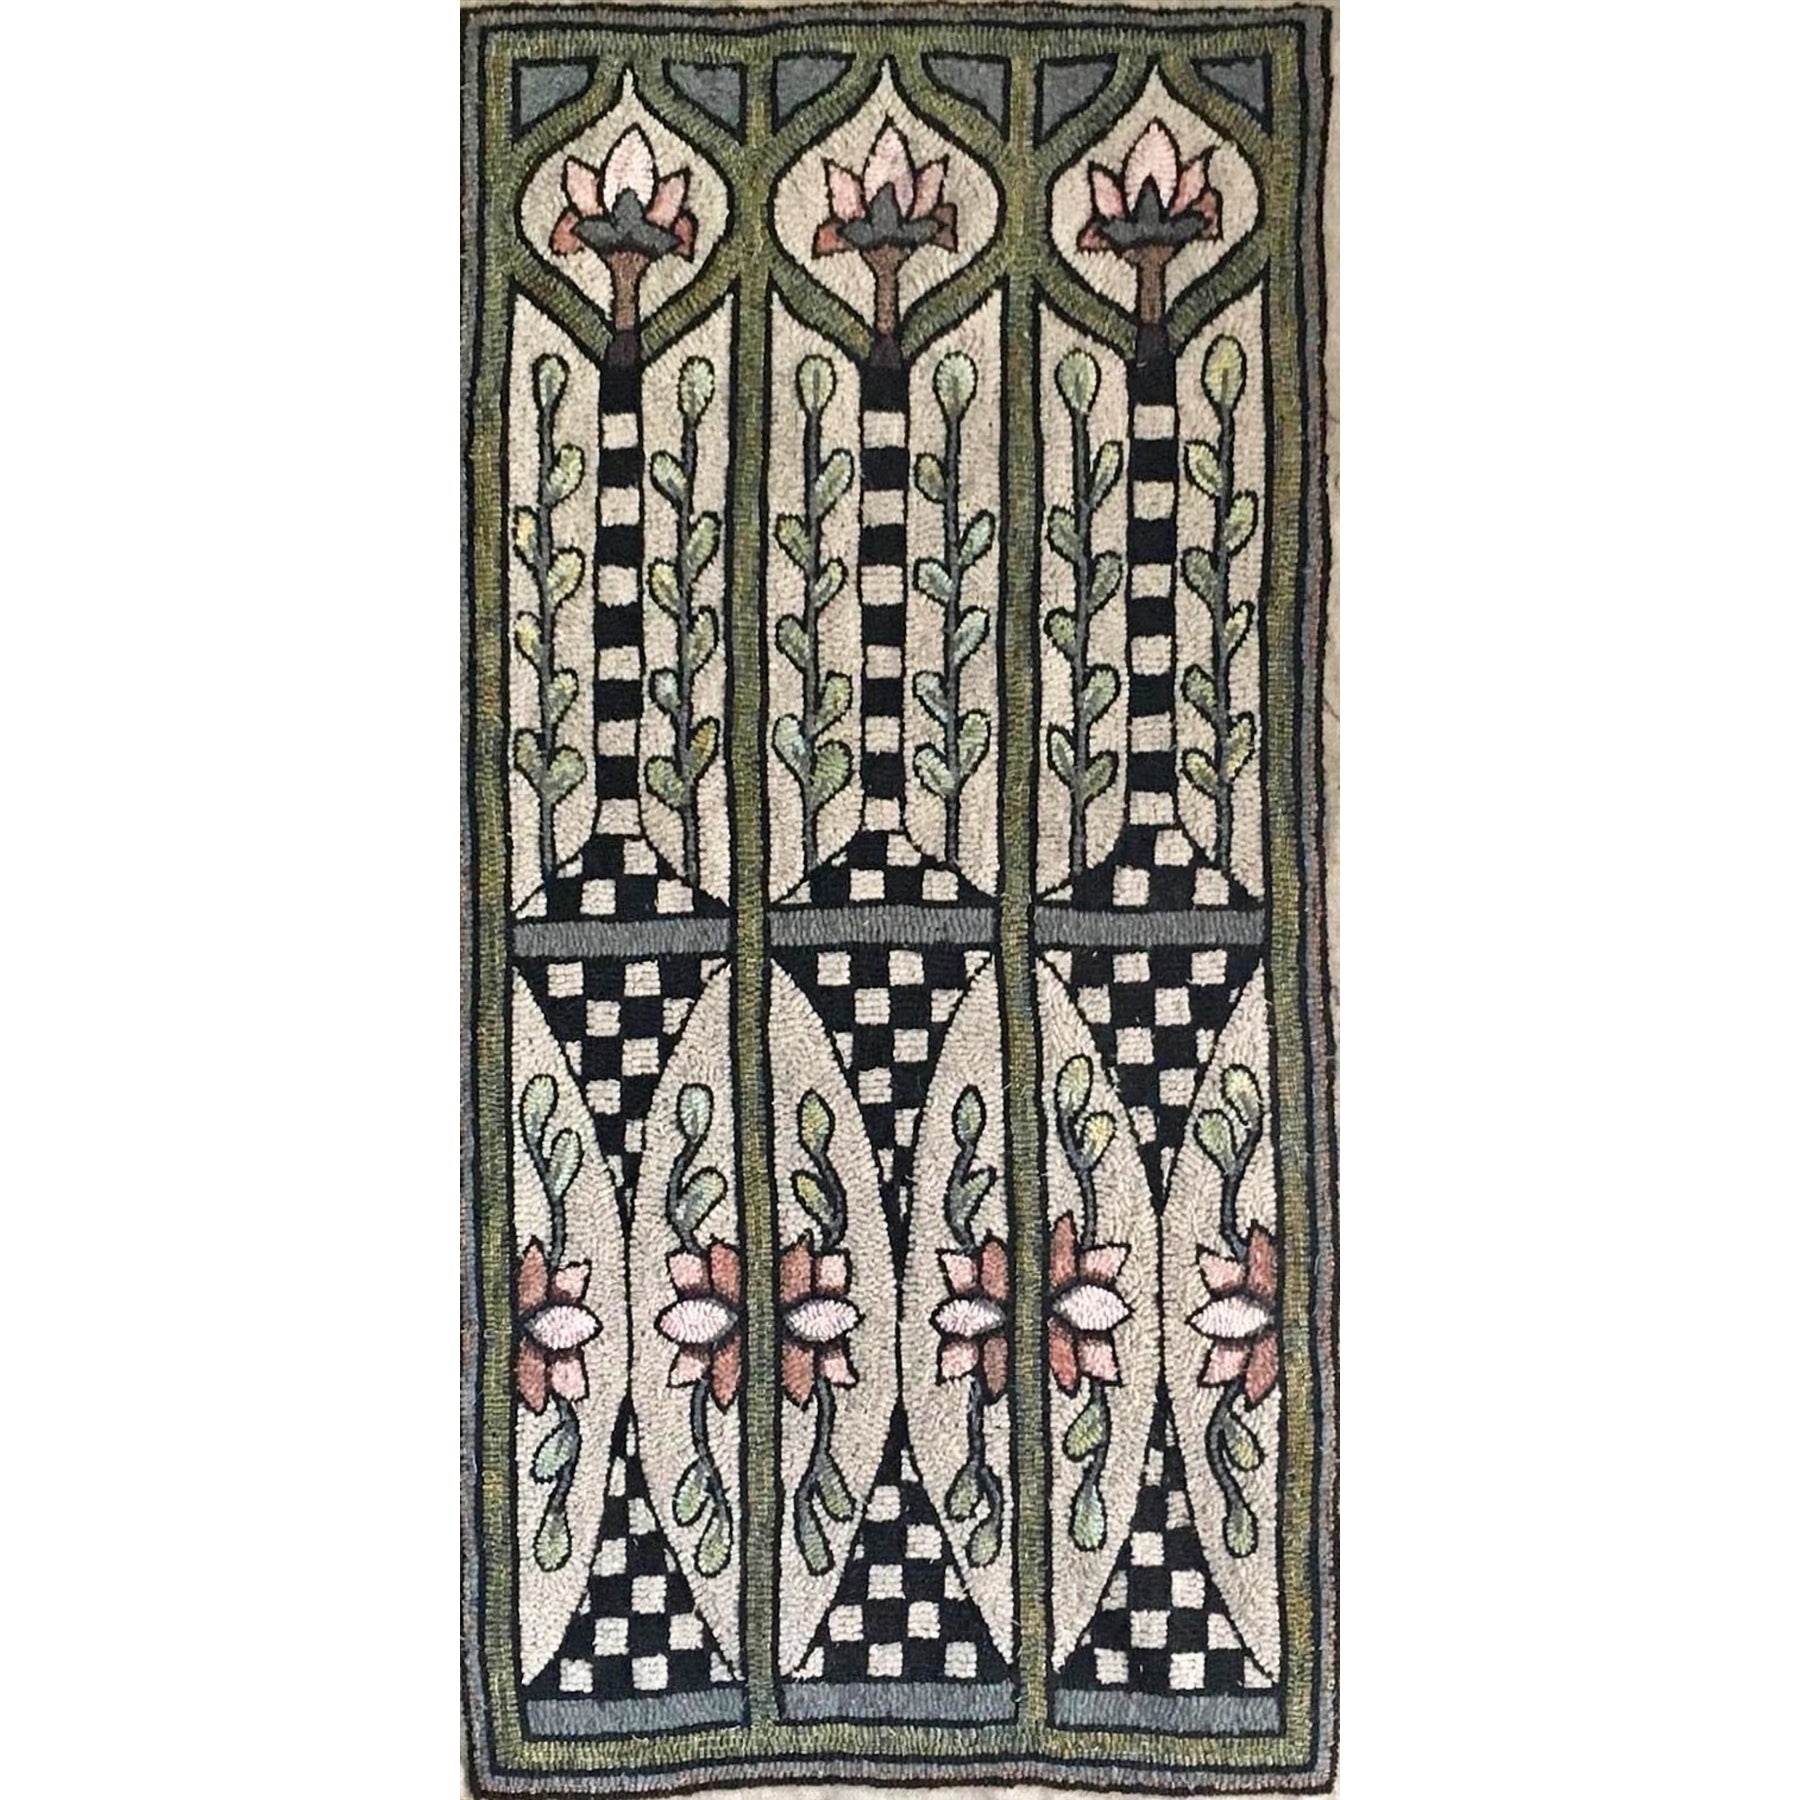 Saffron, rug hooking pattern